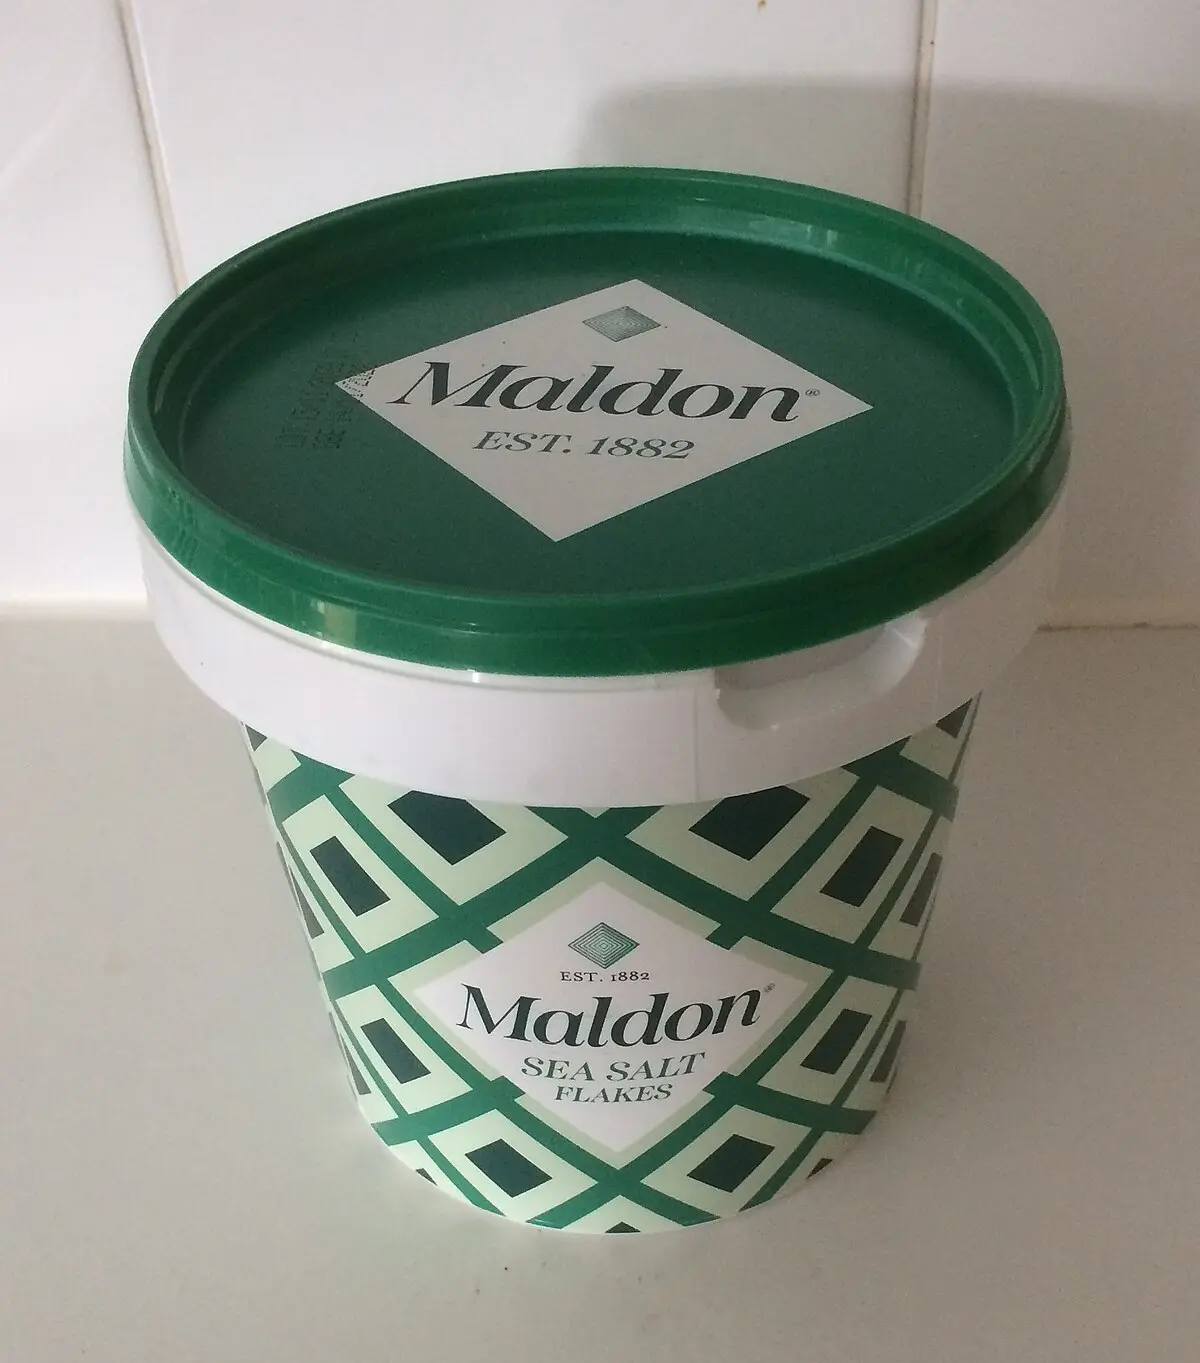 smoked maldon - What is in Maldon sea salt